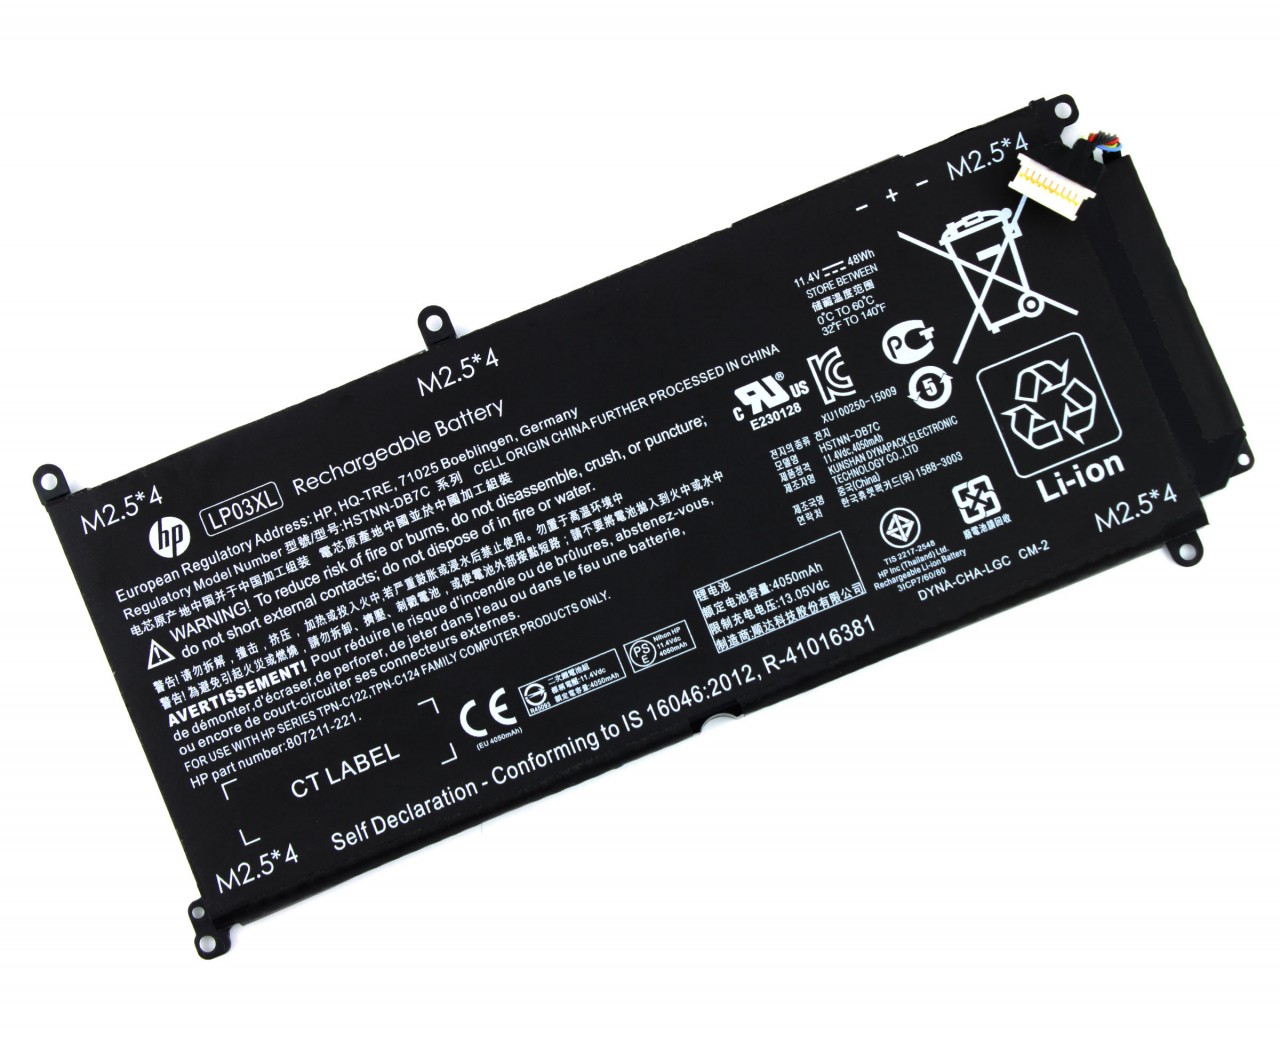 Baterie HP 805094-005 Originala 48Wh